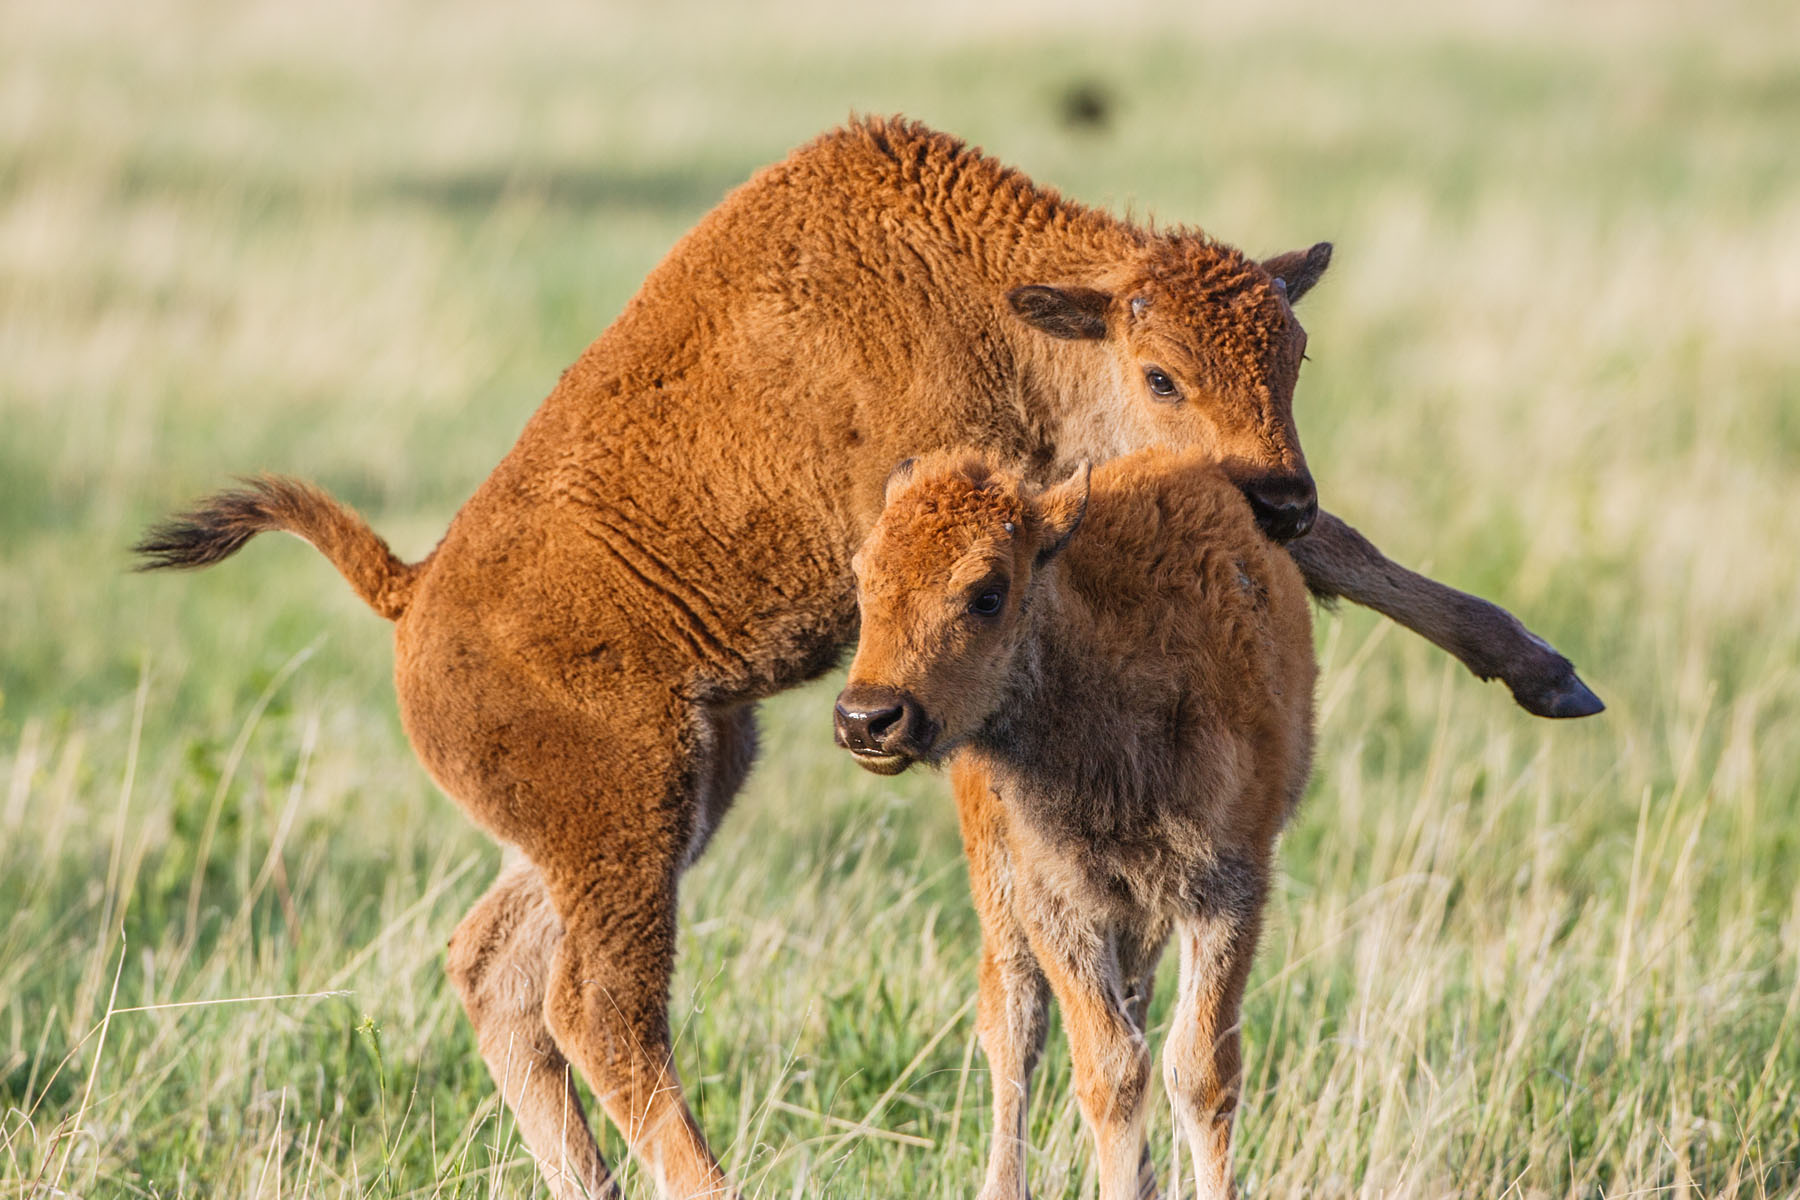 Bison calves, Custer State Park, South Dakota.  Click for next photo.